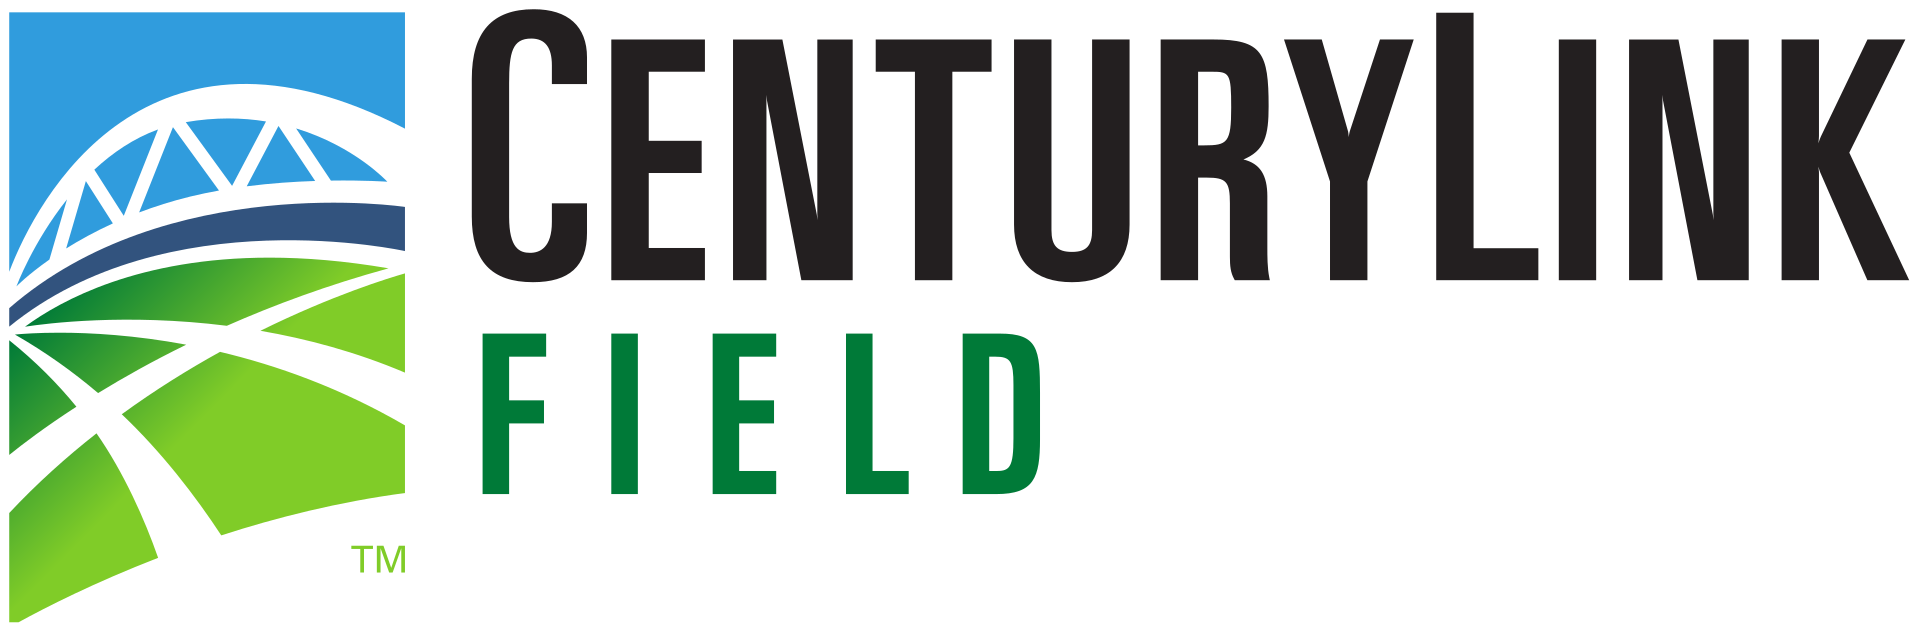 CenturyLink Field Logo